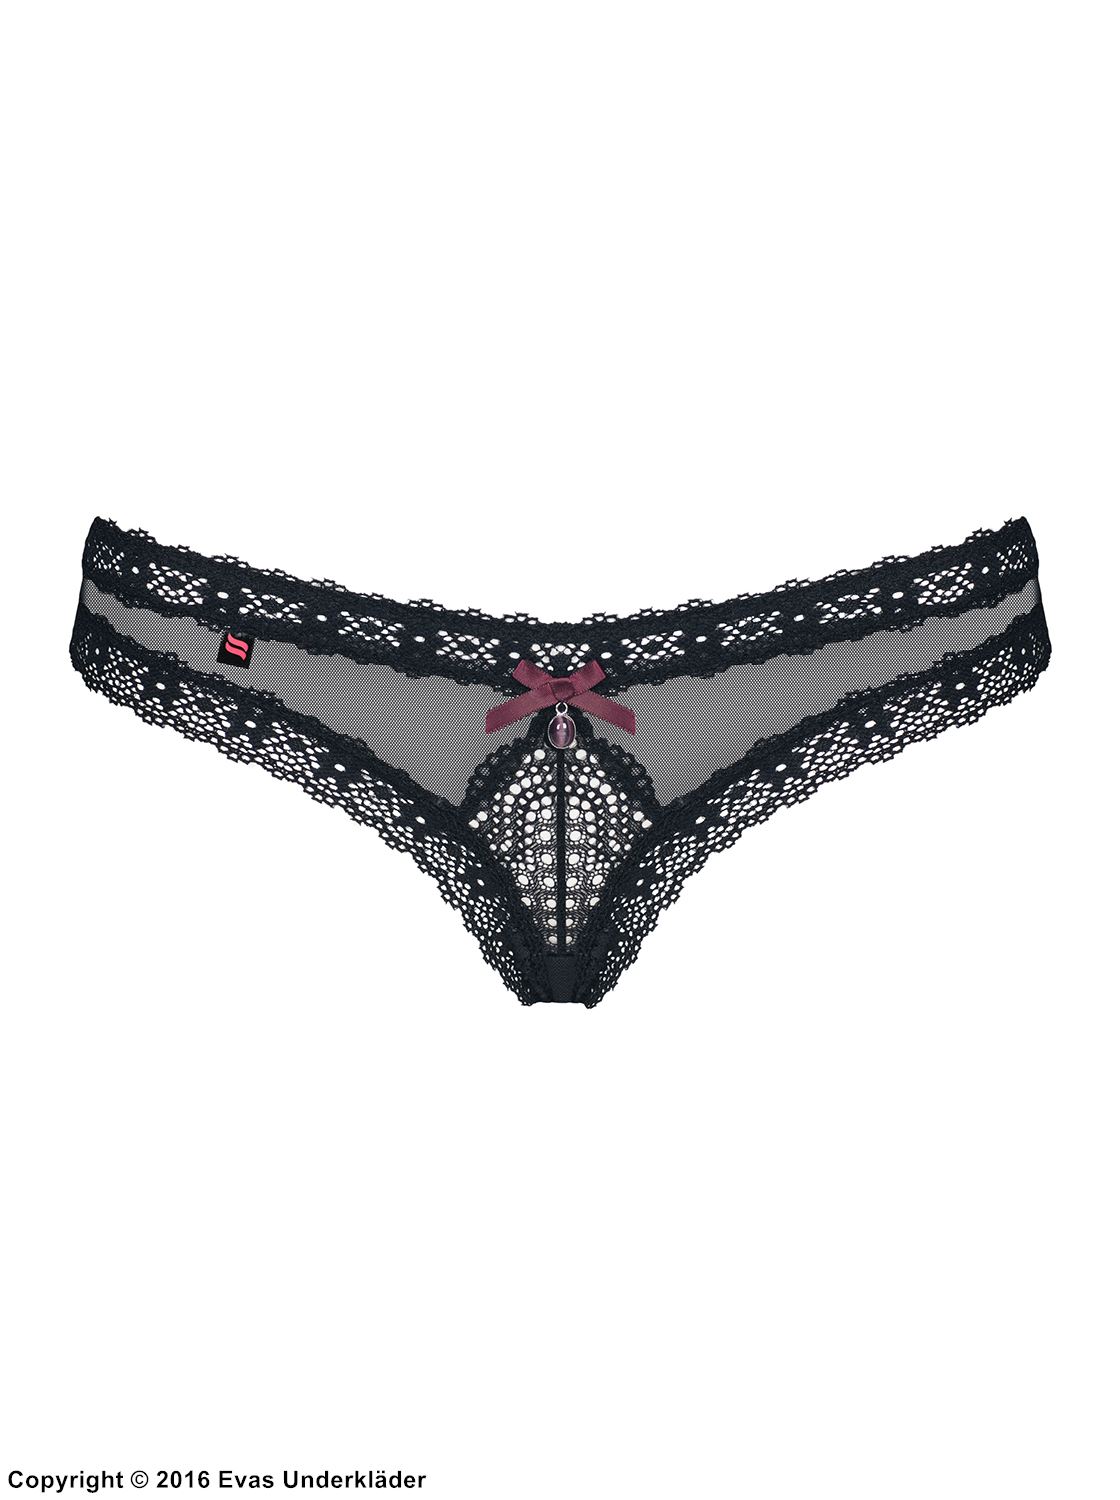 Seductive cheeky panties, sheer mesh, lace edge